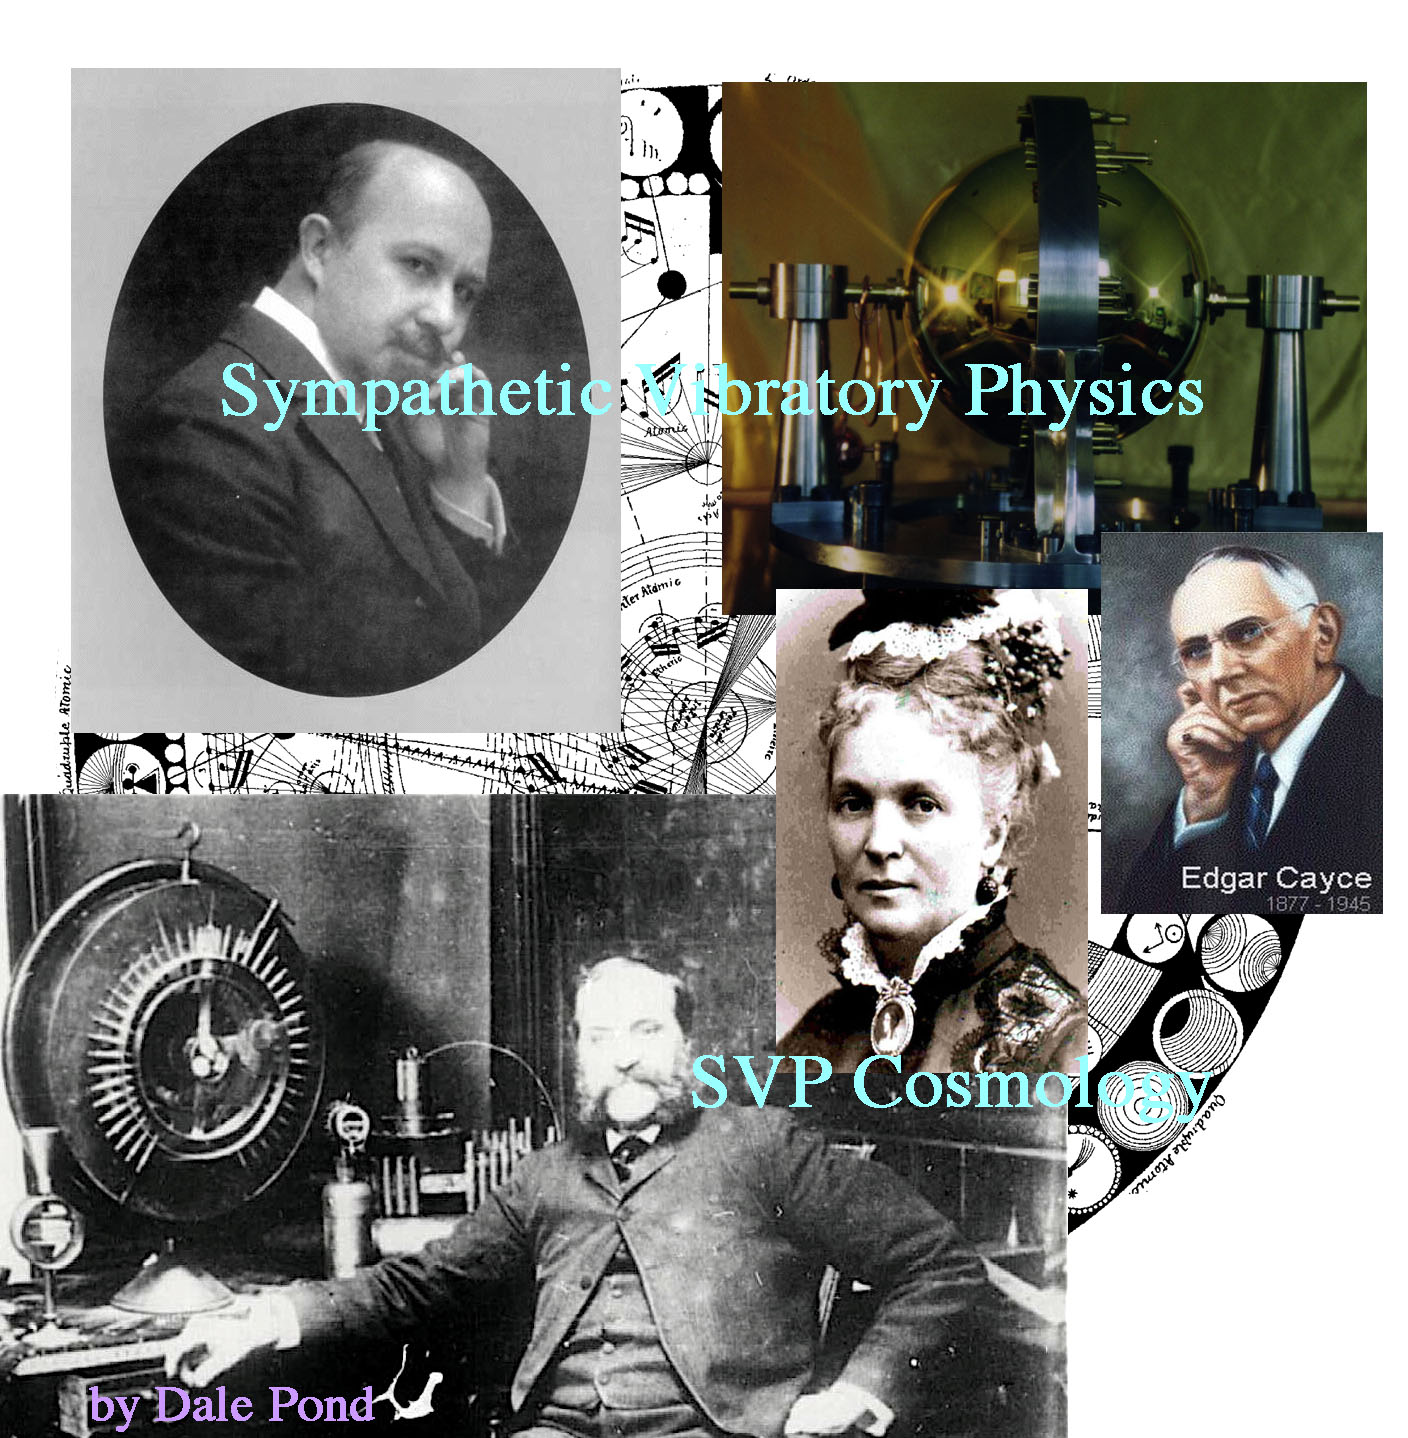 Cosmology Cover art